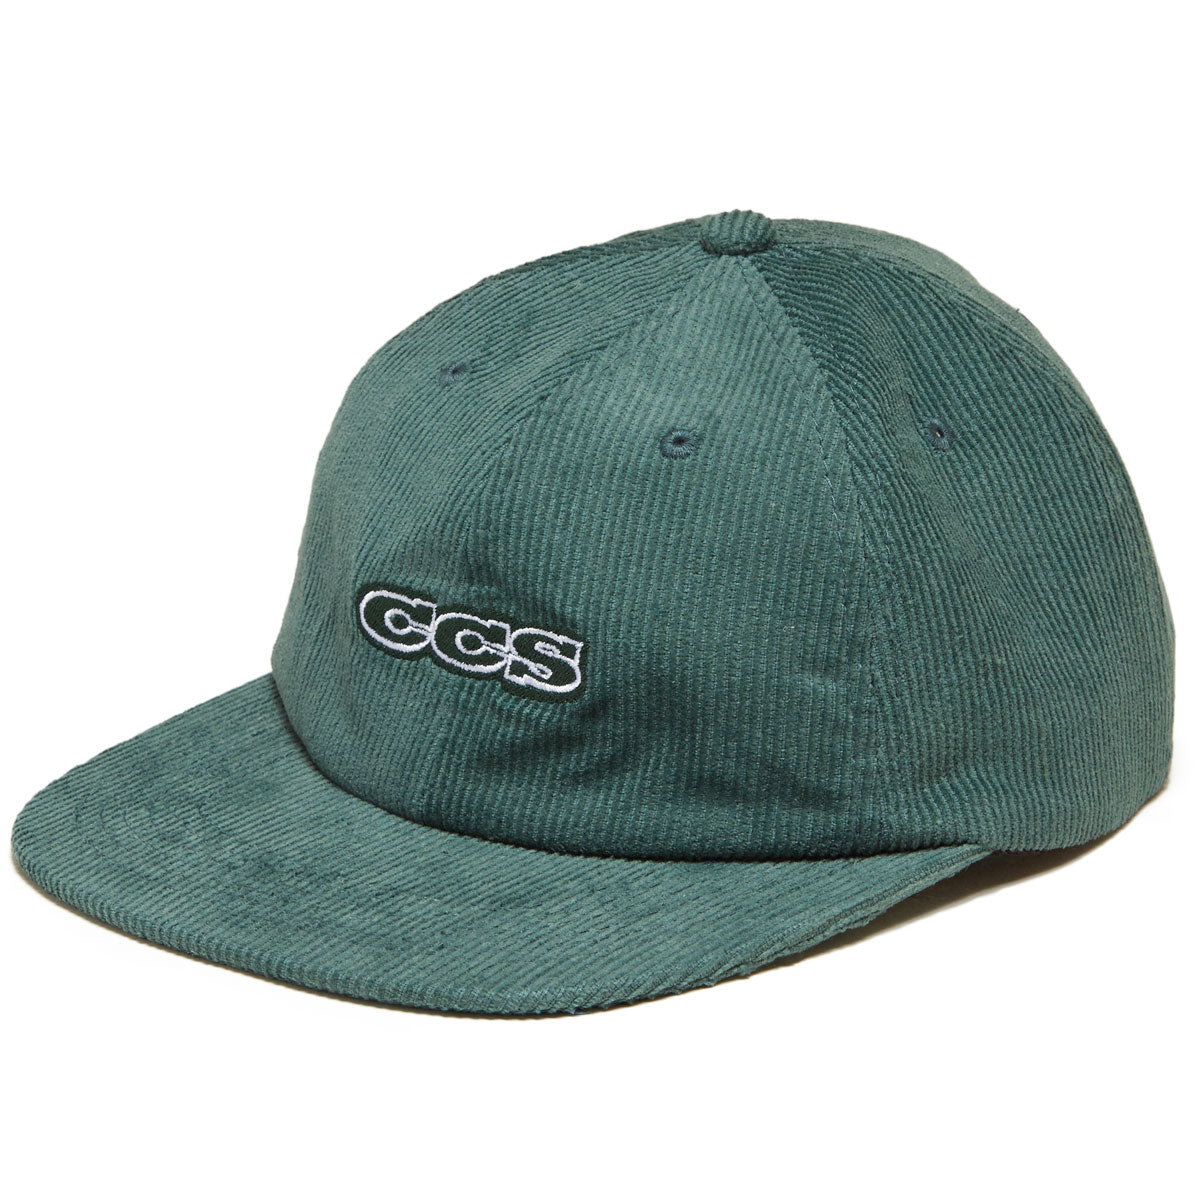 CCS 96 Logo Cord Snapback Hat - Dark Green image 1